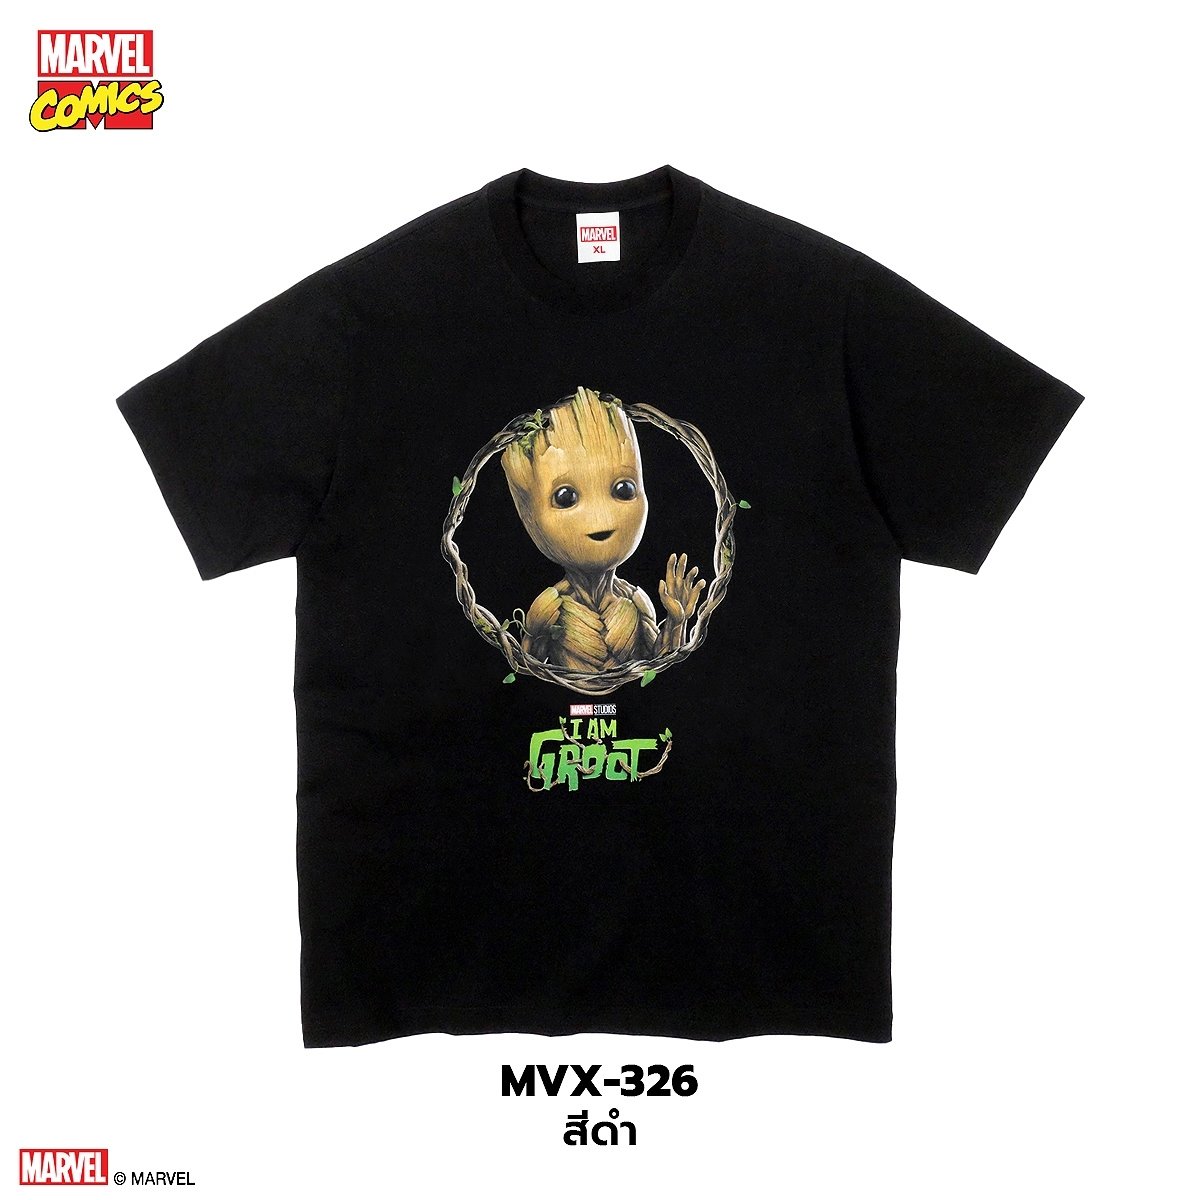 GROOT Marvel Comics T-shirt (MVX-326)